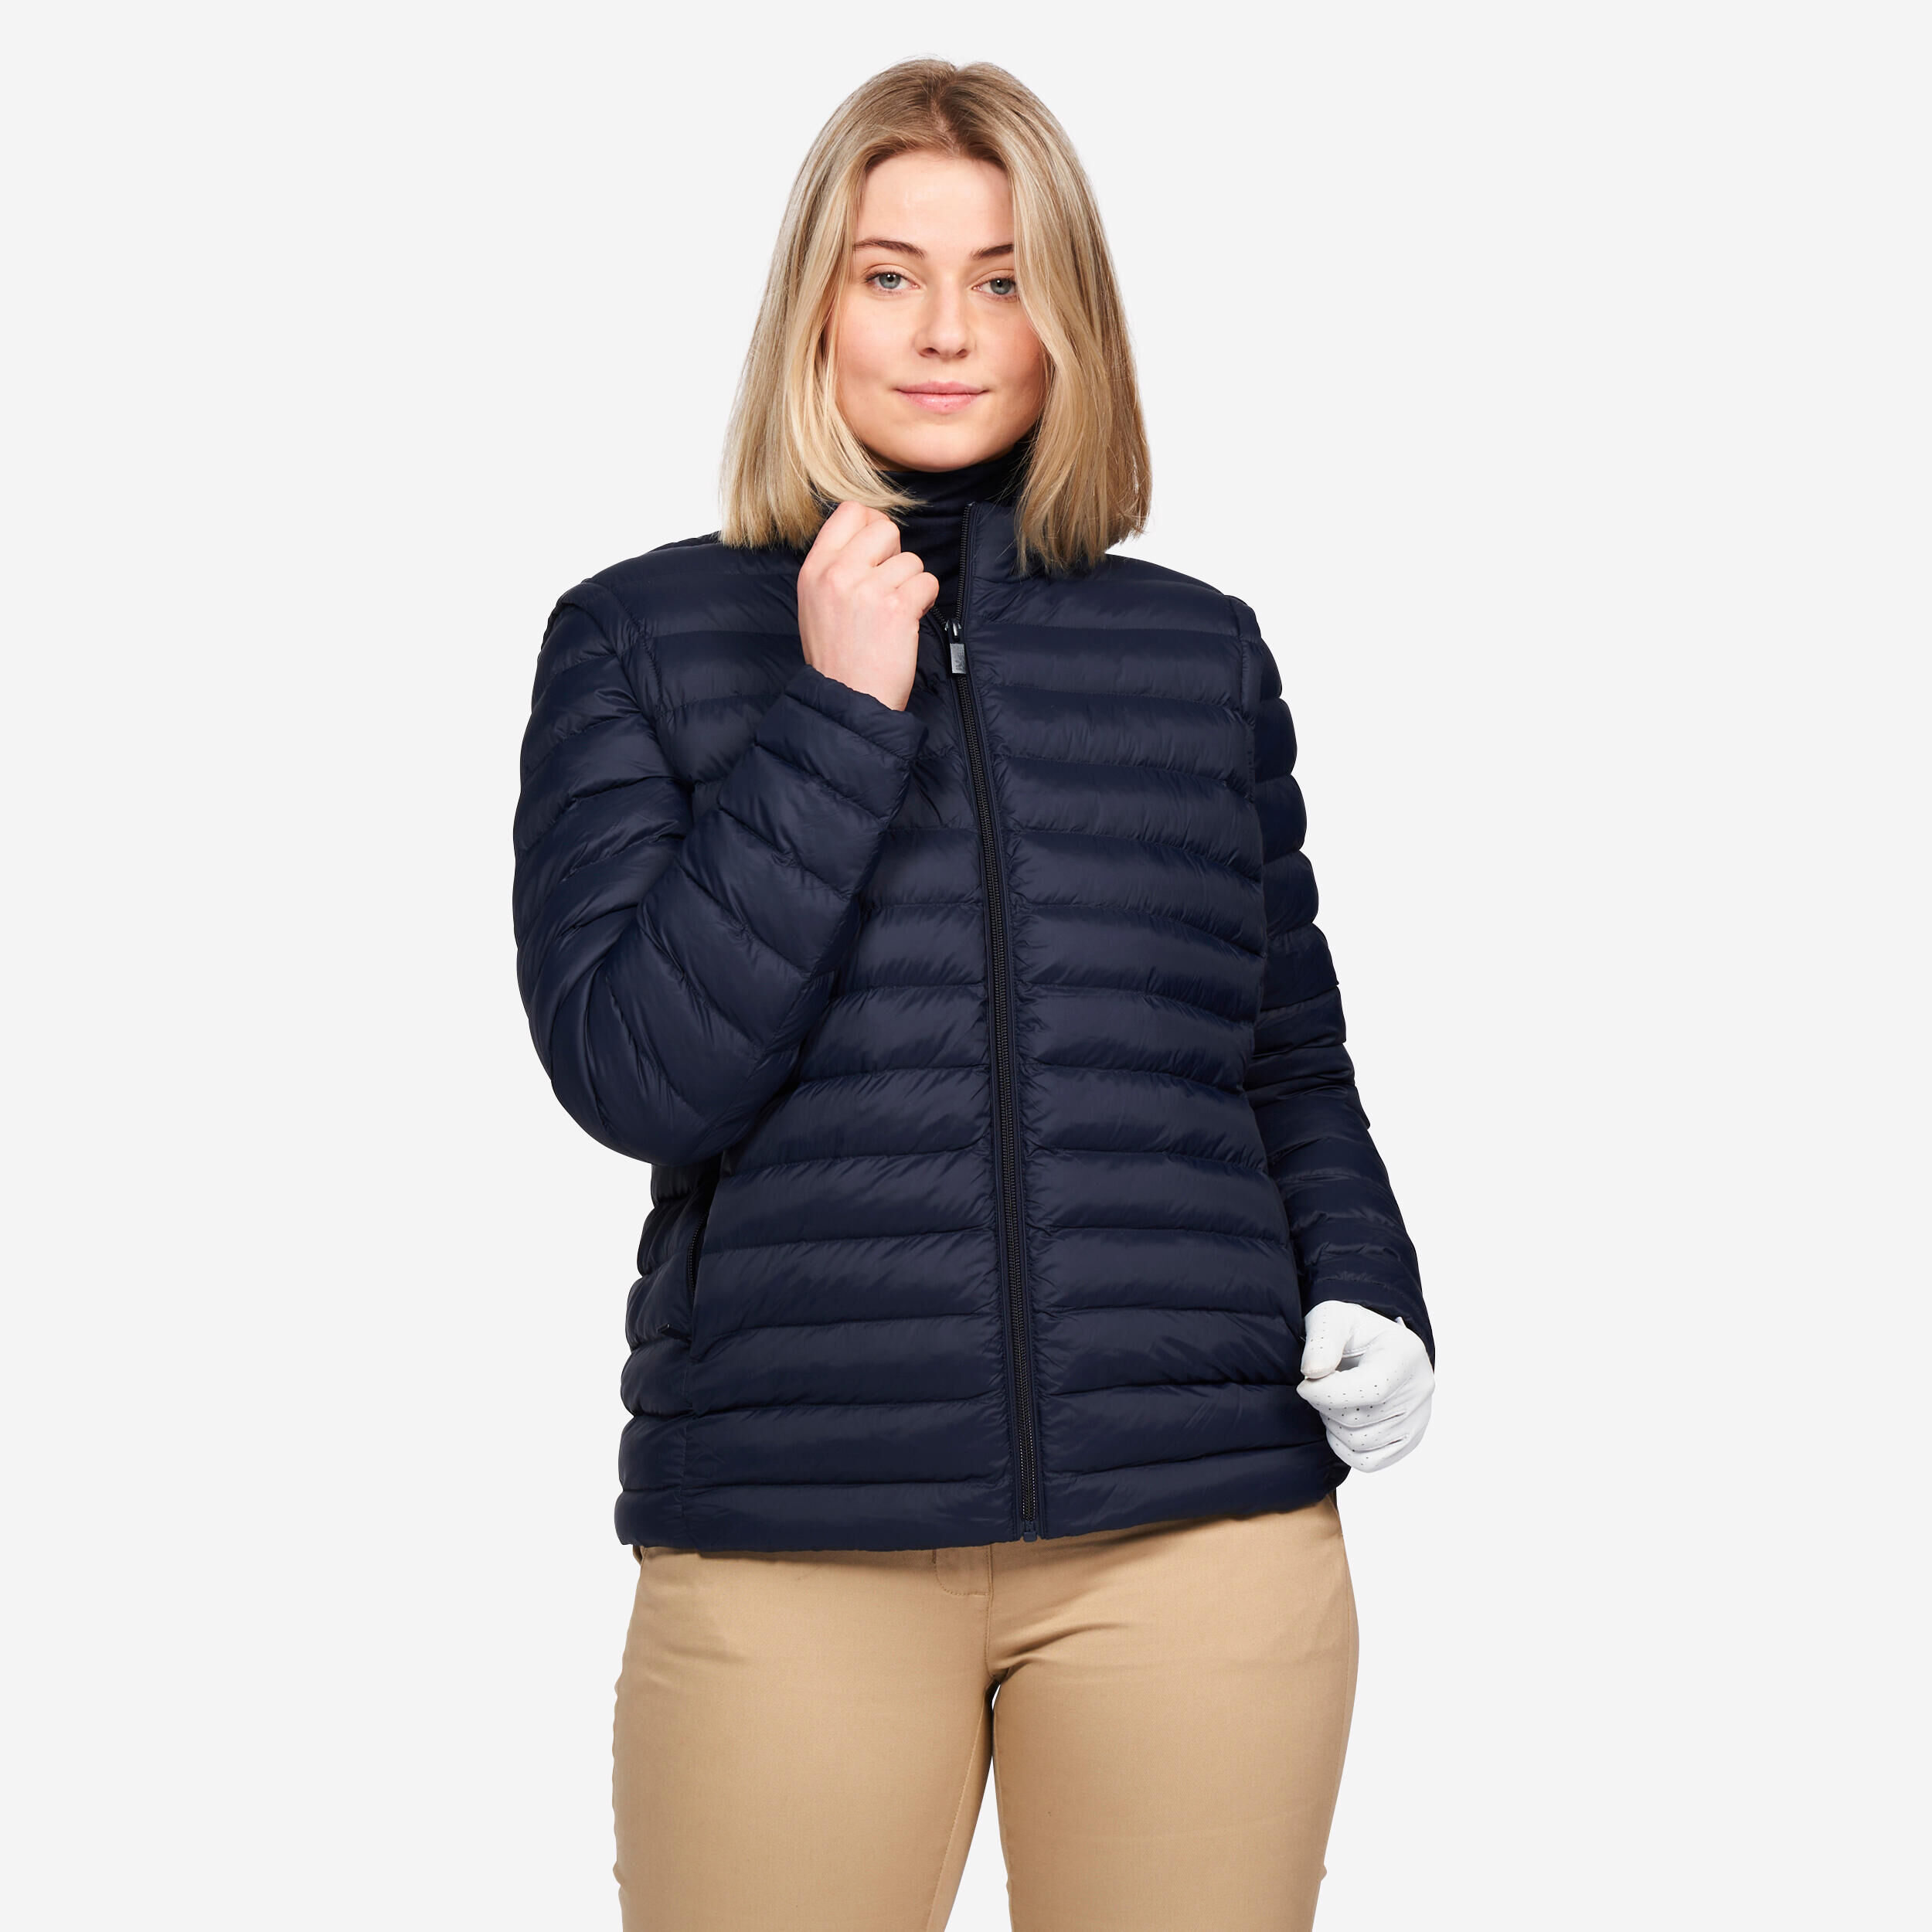 INESIS Women's golf long sleeved down jacket - CW900 Heatflex navy